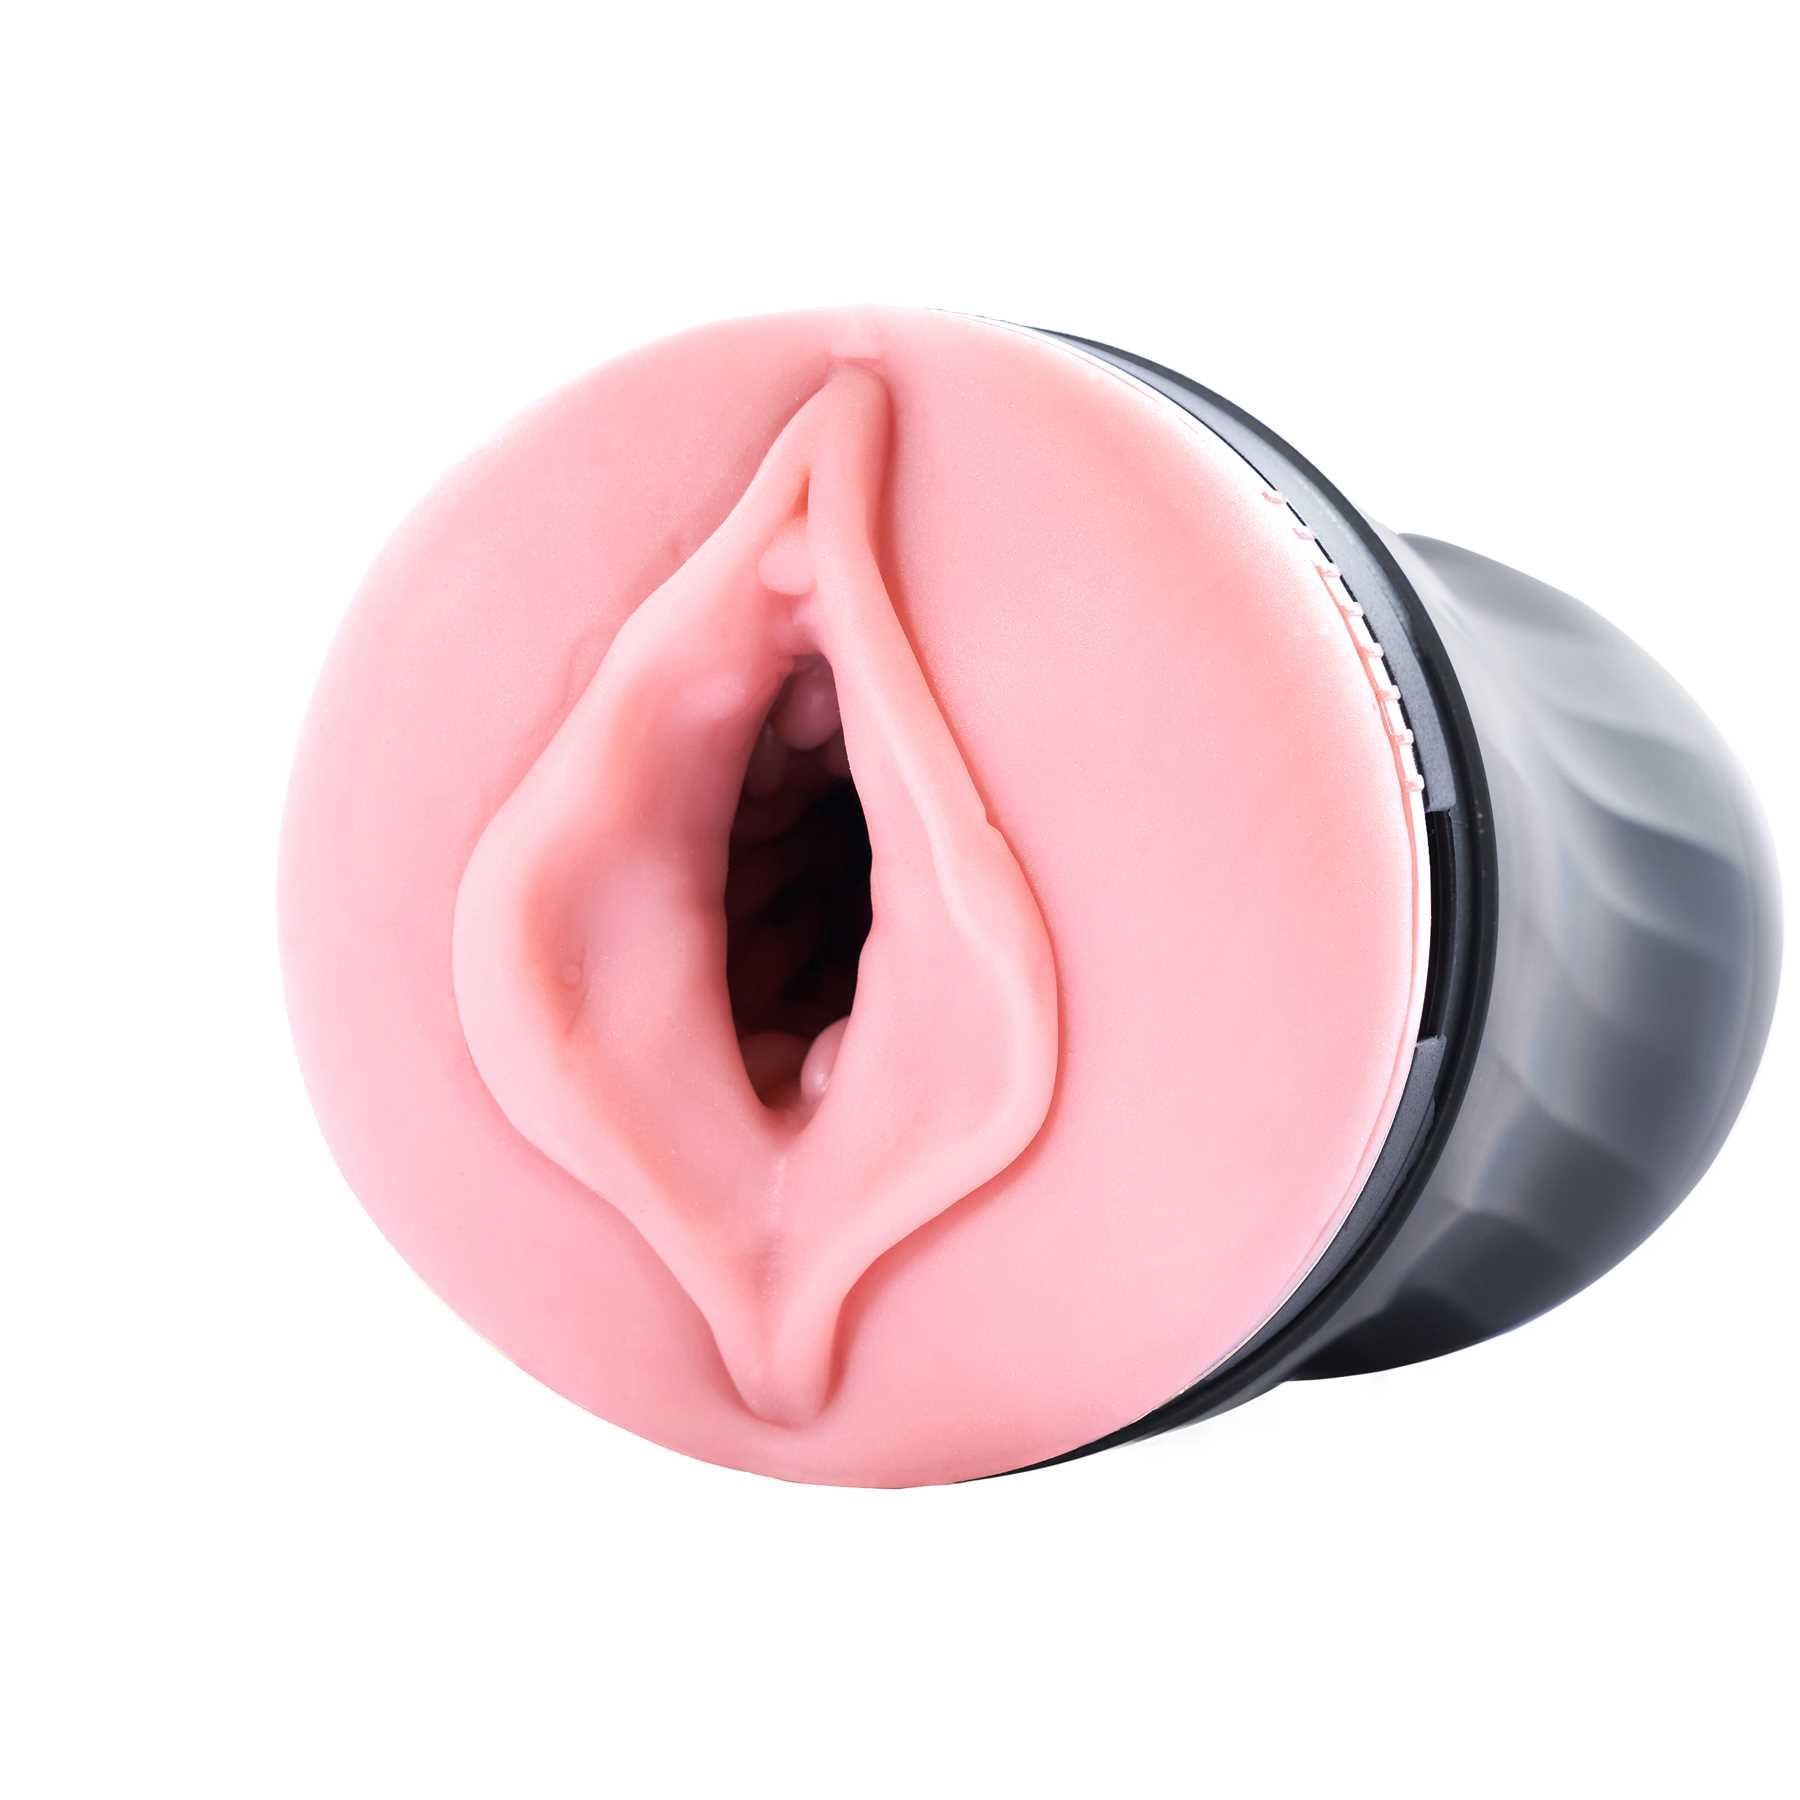 Maxtasy Stroke Master Stroker - Realistic Pink Vagina close up of opening